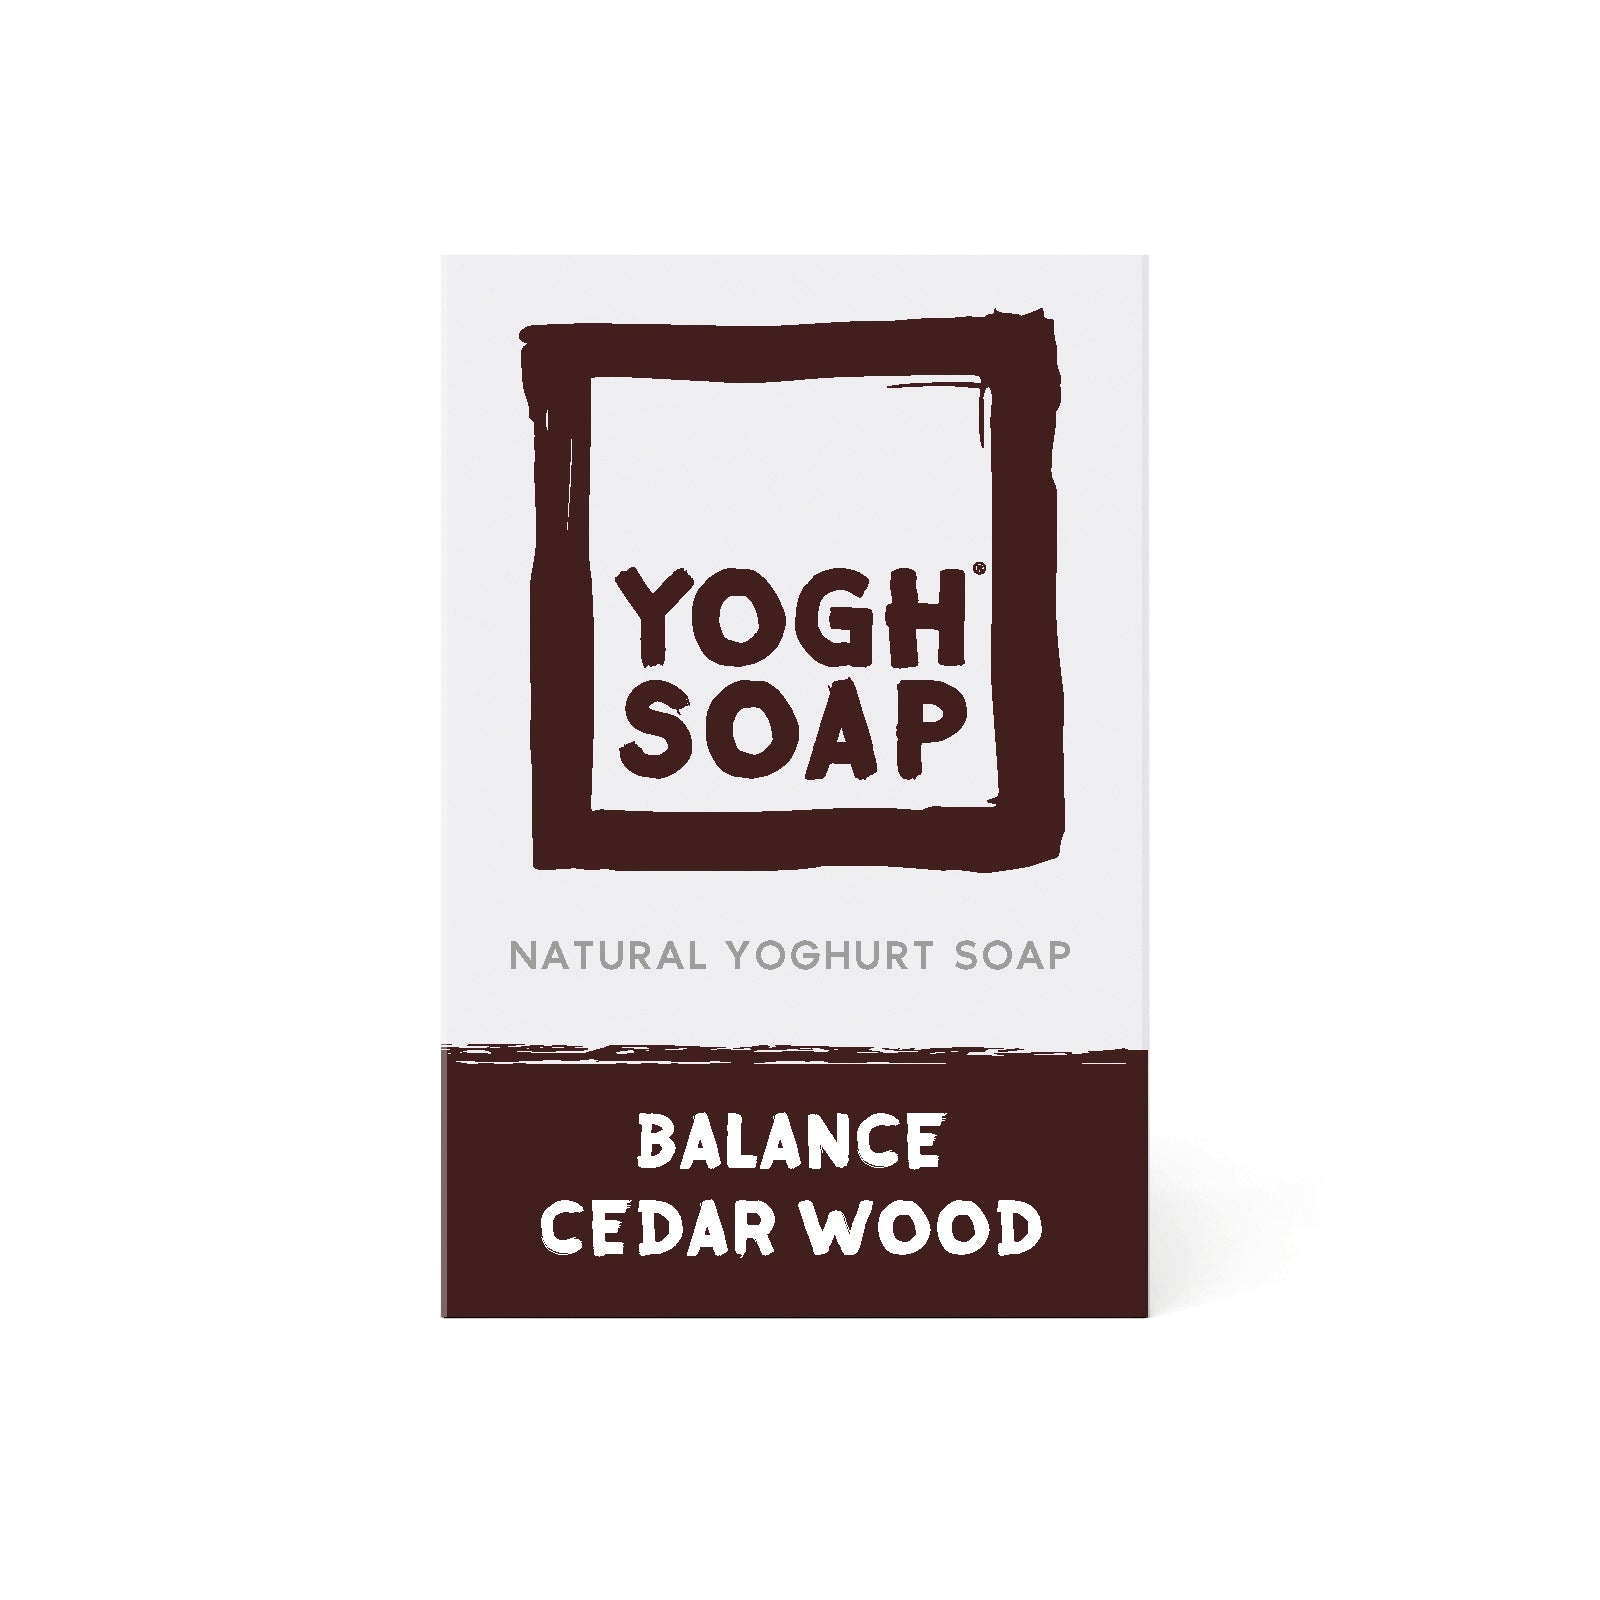 YOGHSOAP® Balance Cedar, 100g.